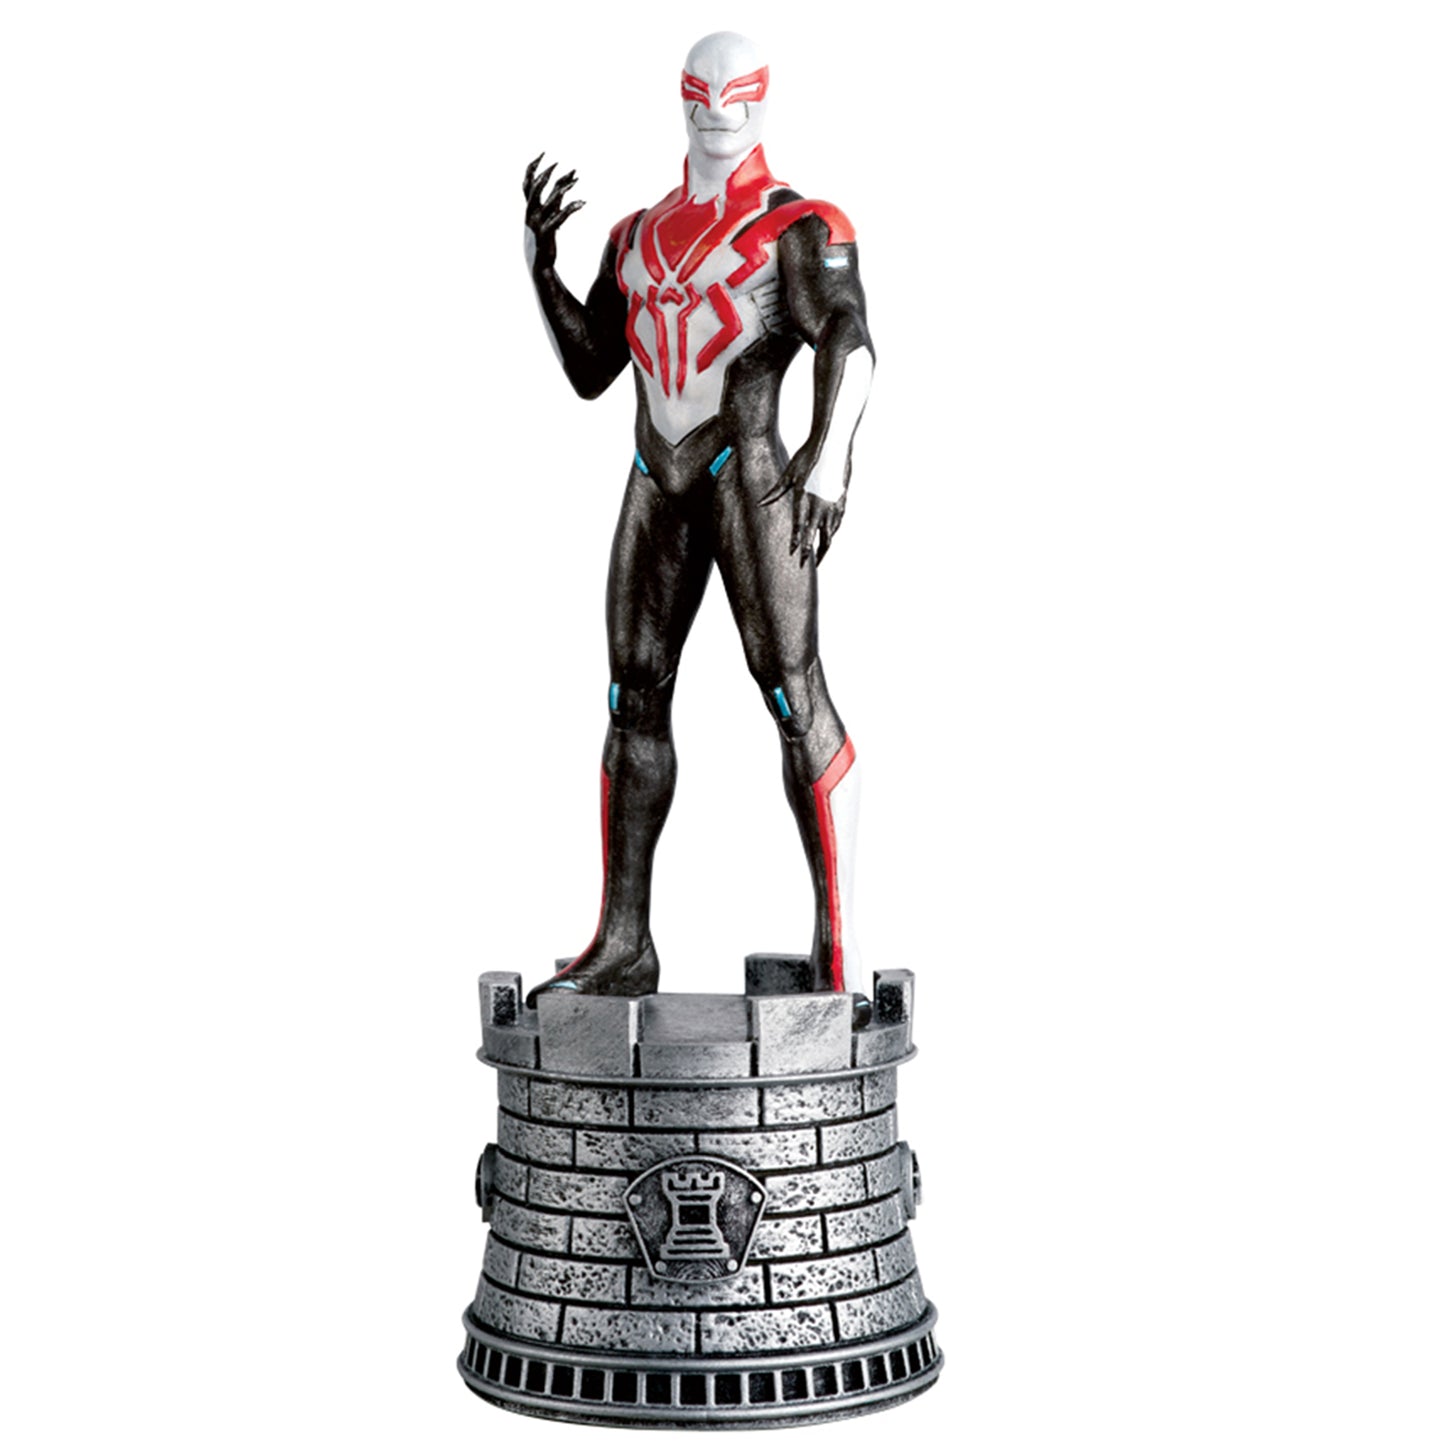 Marvel Chess Collection - 12cm Spider-Man 2099 White Castle 87